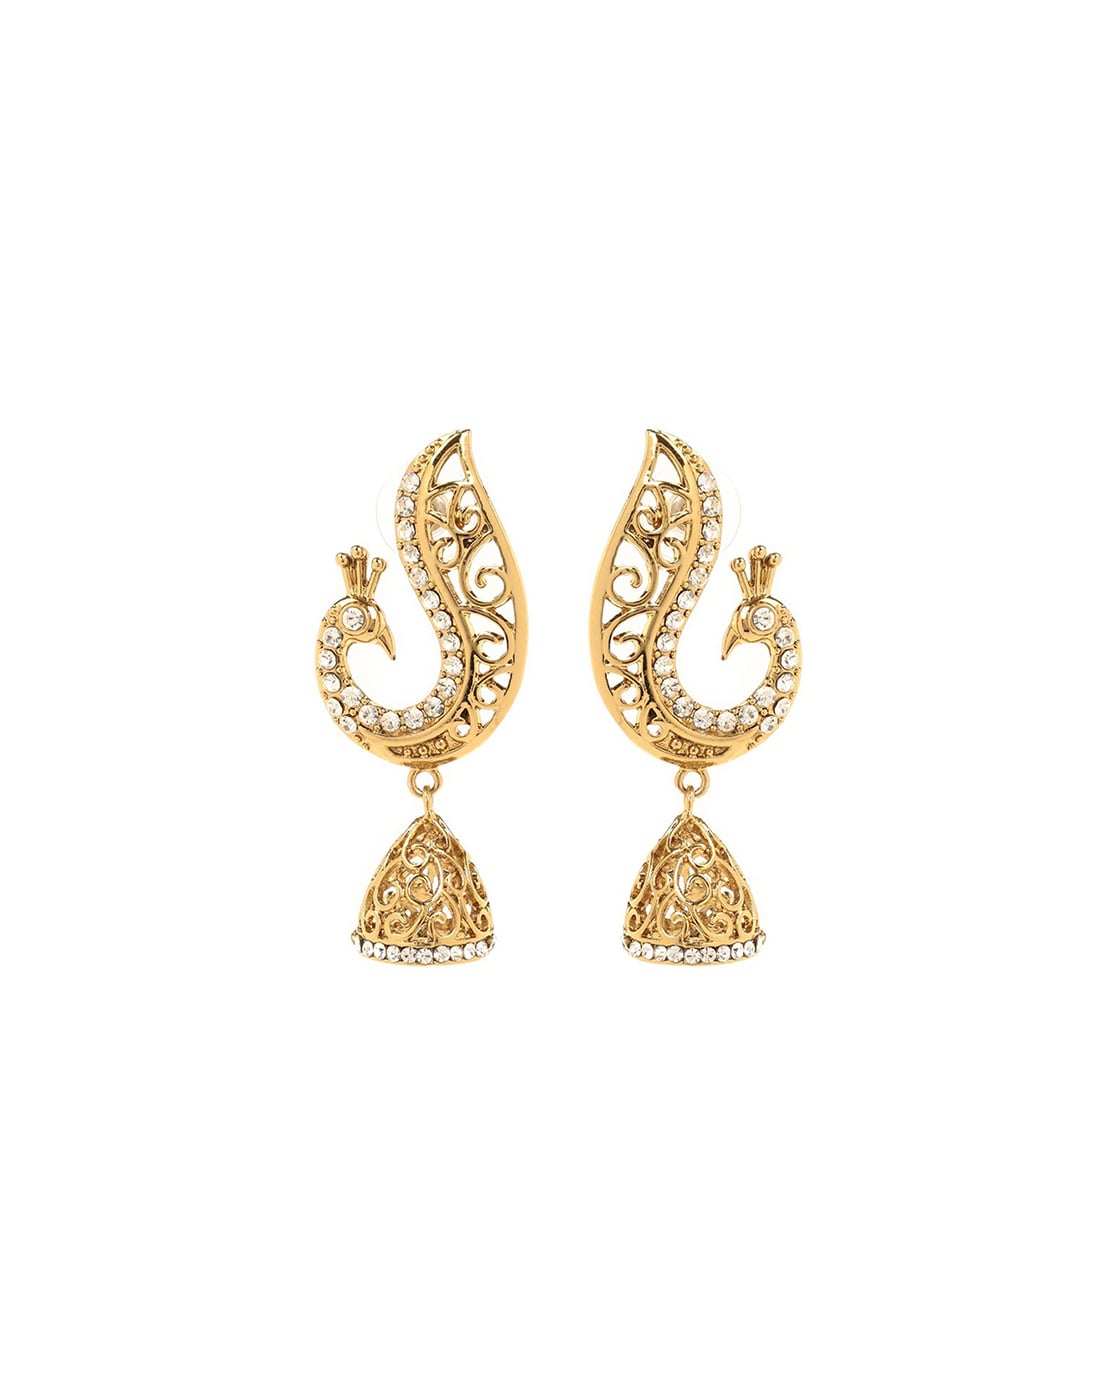 Buy Beautiful Party Wear White Stone Peacock Earring Design One Gram Gold  Earring Online